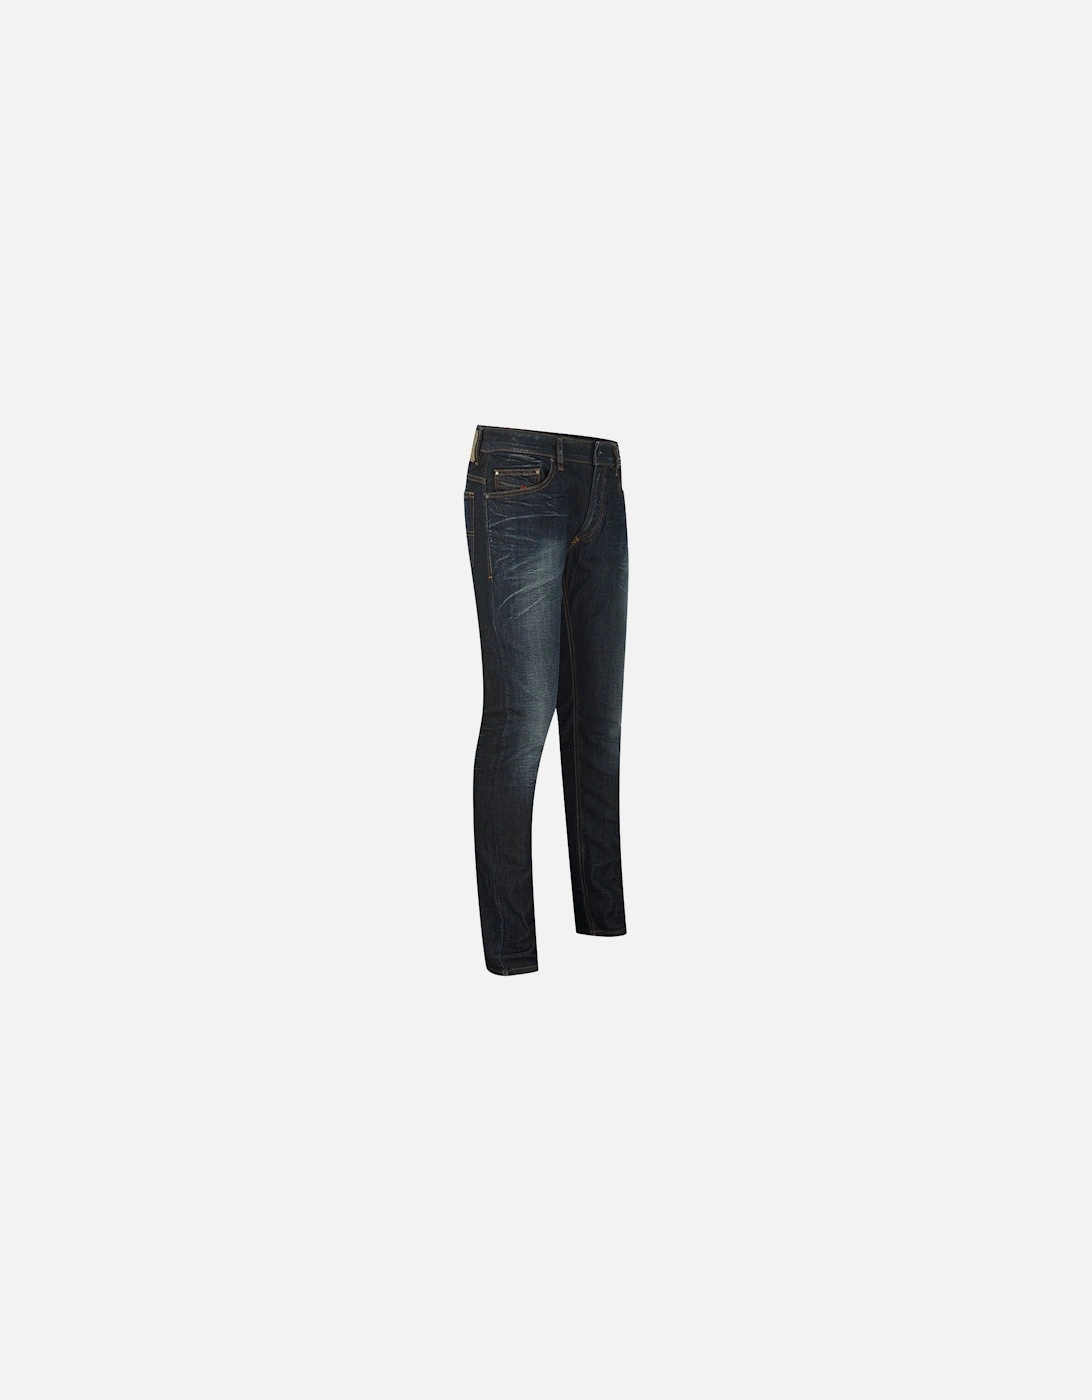 Thavar-XP R81TJ Jeans